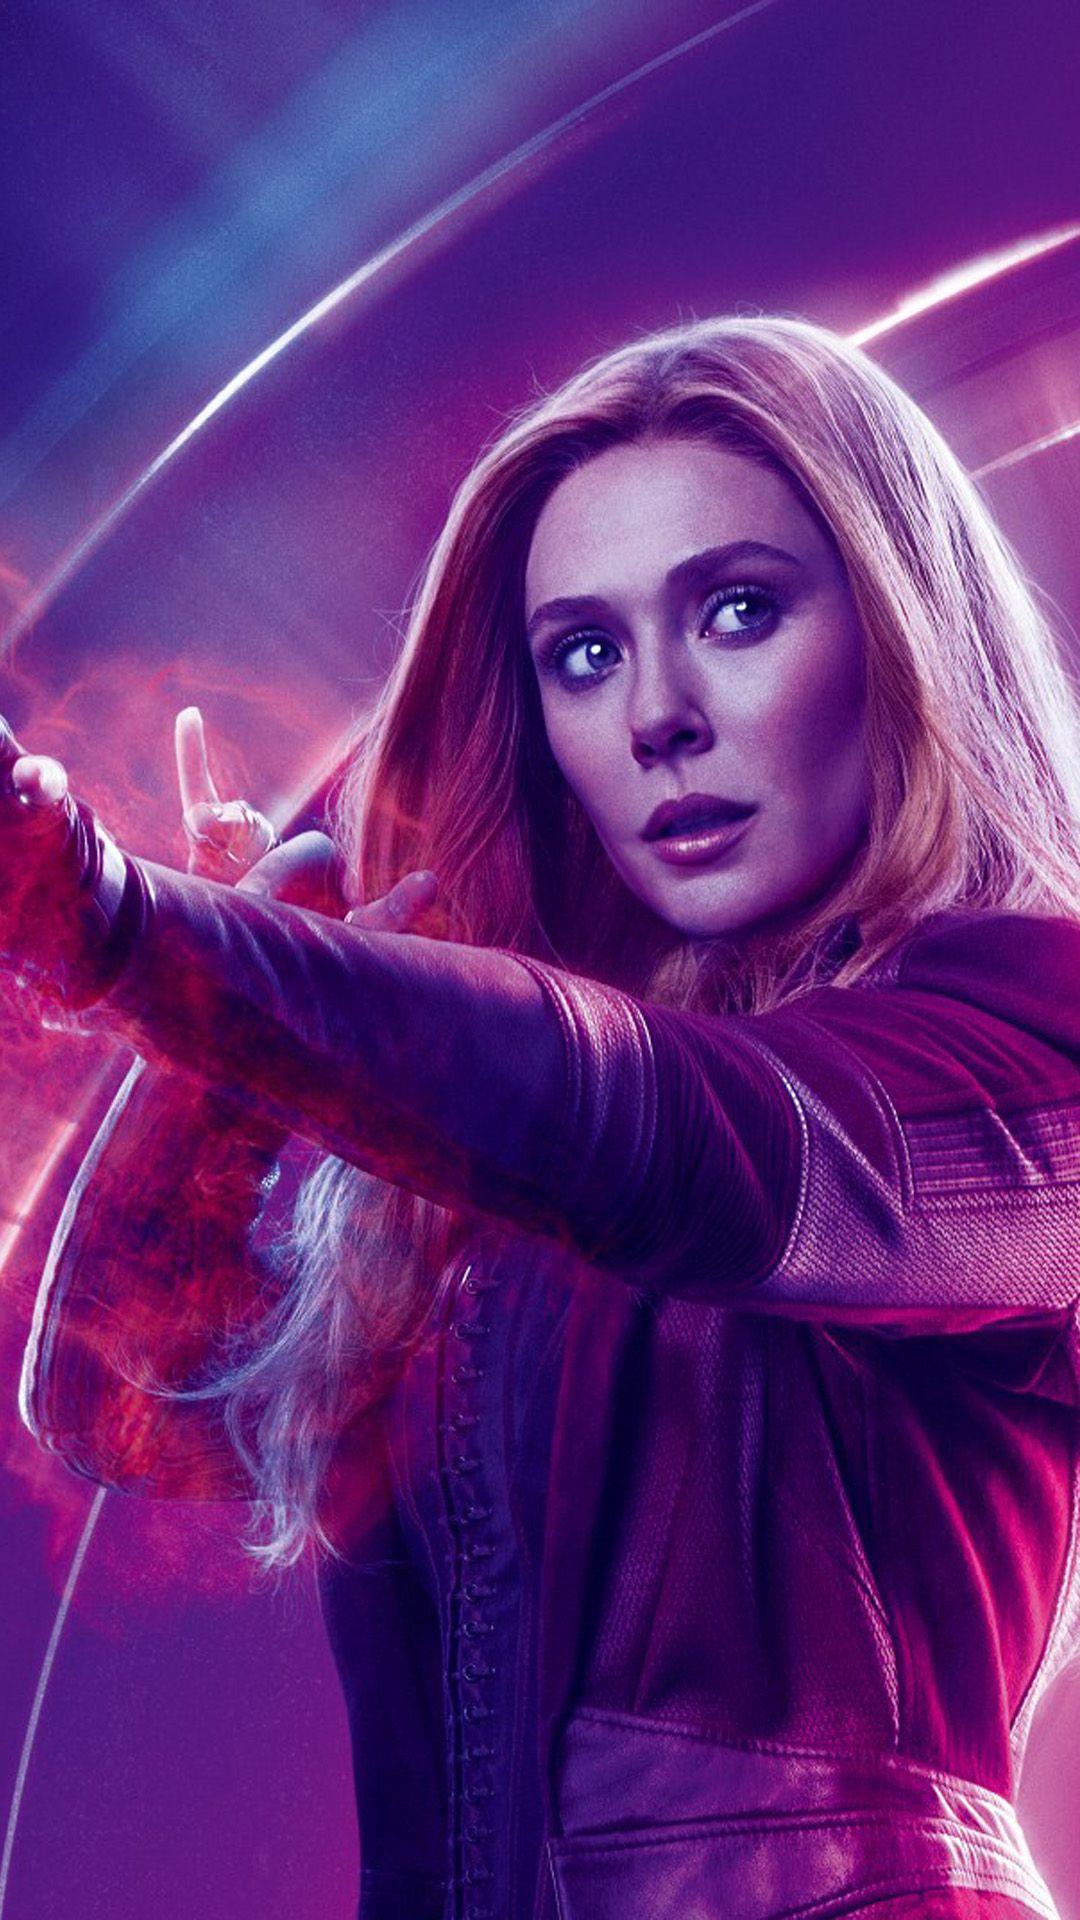 Elizabeth Olsen In Avengers Infinity War 4K Ultra HD Mobile Wallpaper. Marvel avengers movies, Avengers picture, Scarlet witch marvel